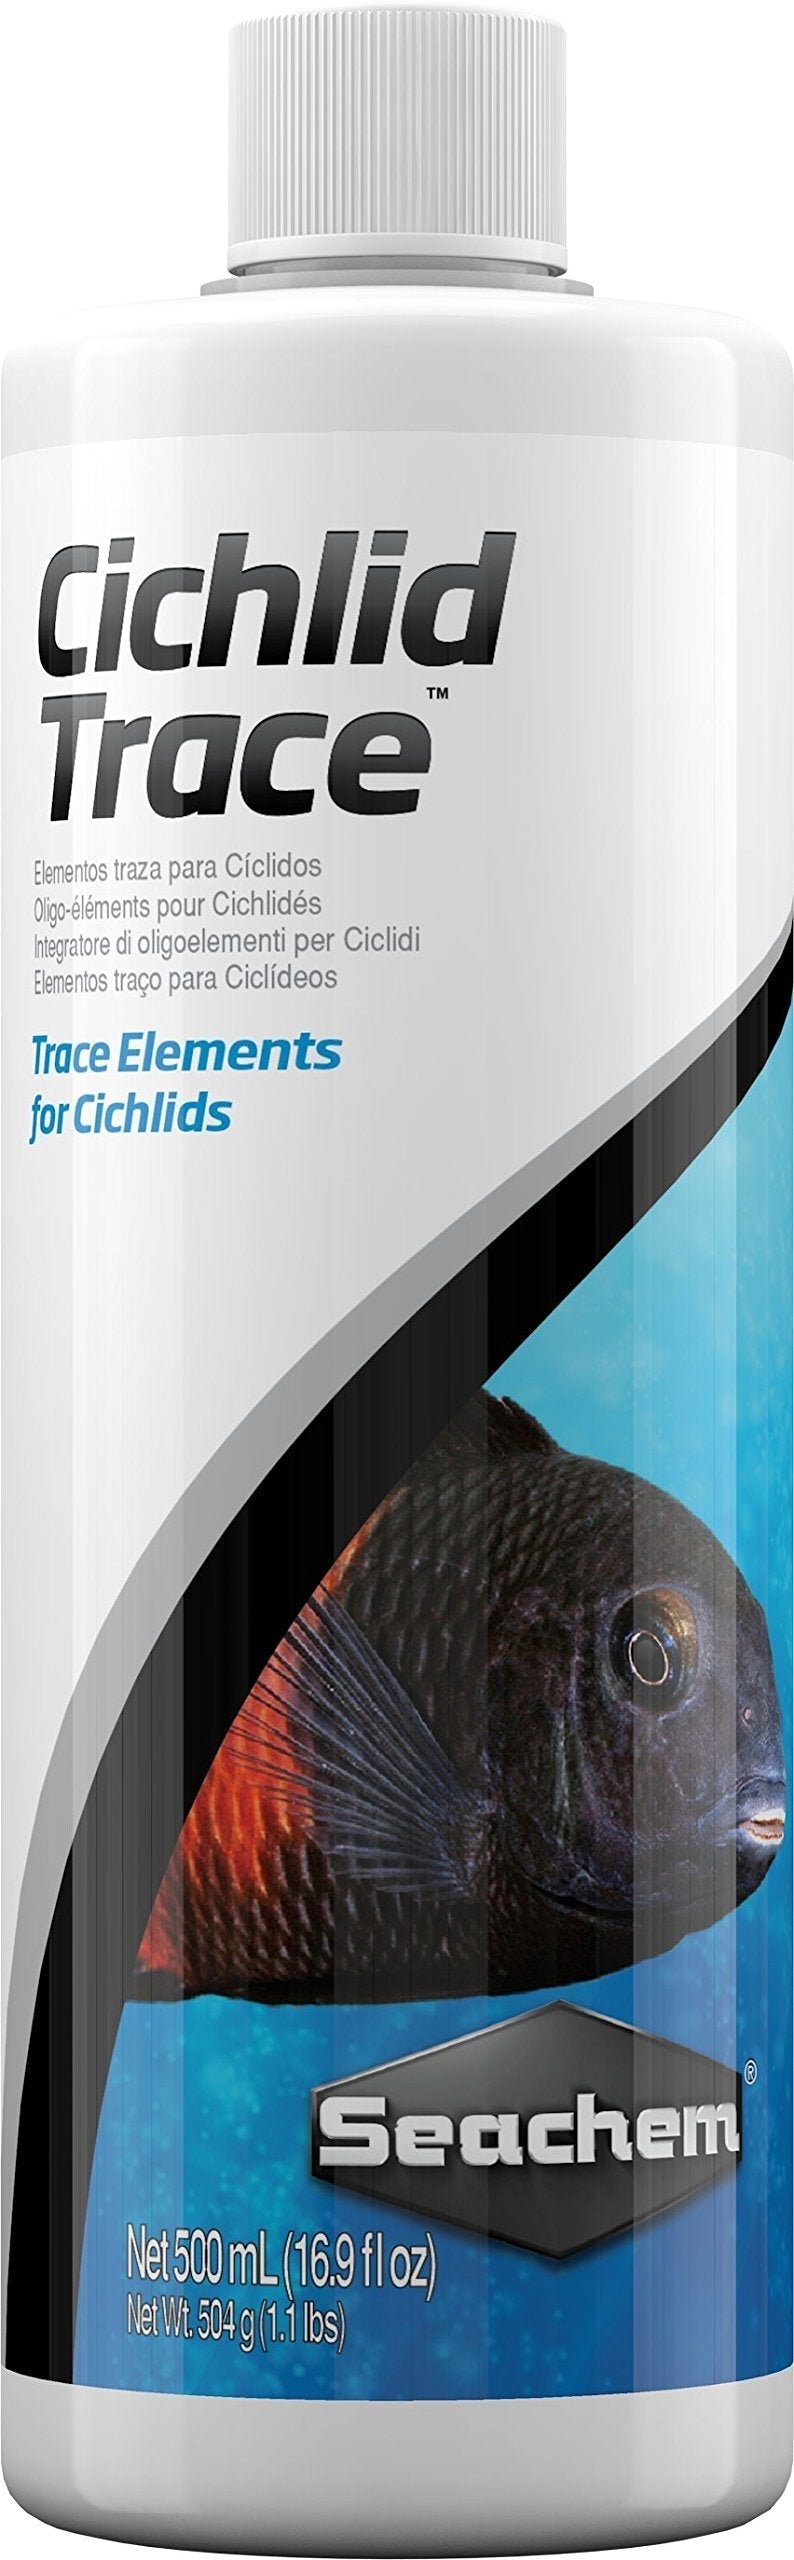 Seachem Cichlid Trace Elements 500ml 1 - PawsPlanet Australia